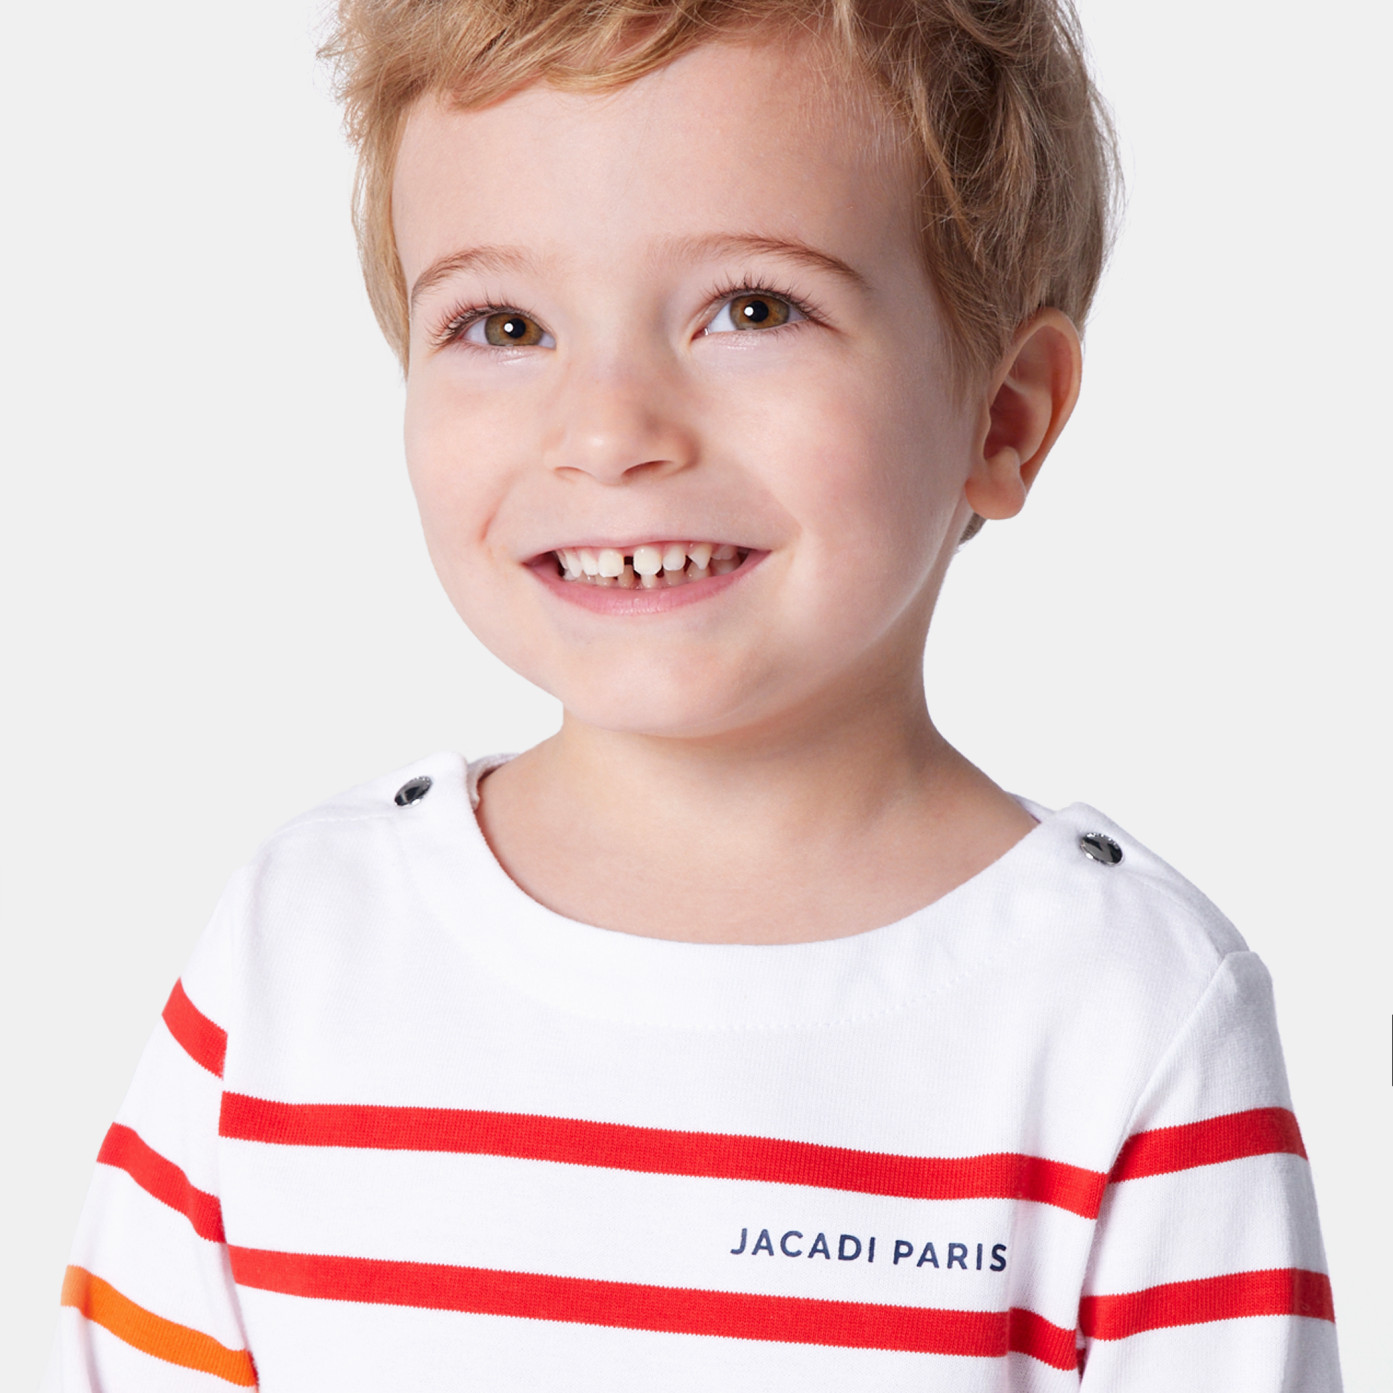 Baby boy sailor shirt גודל 36M צבע לבן/צבעוני Couleur primaire ללא צבע ...